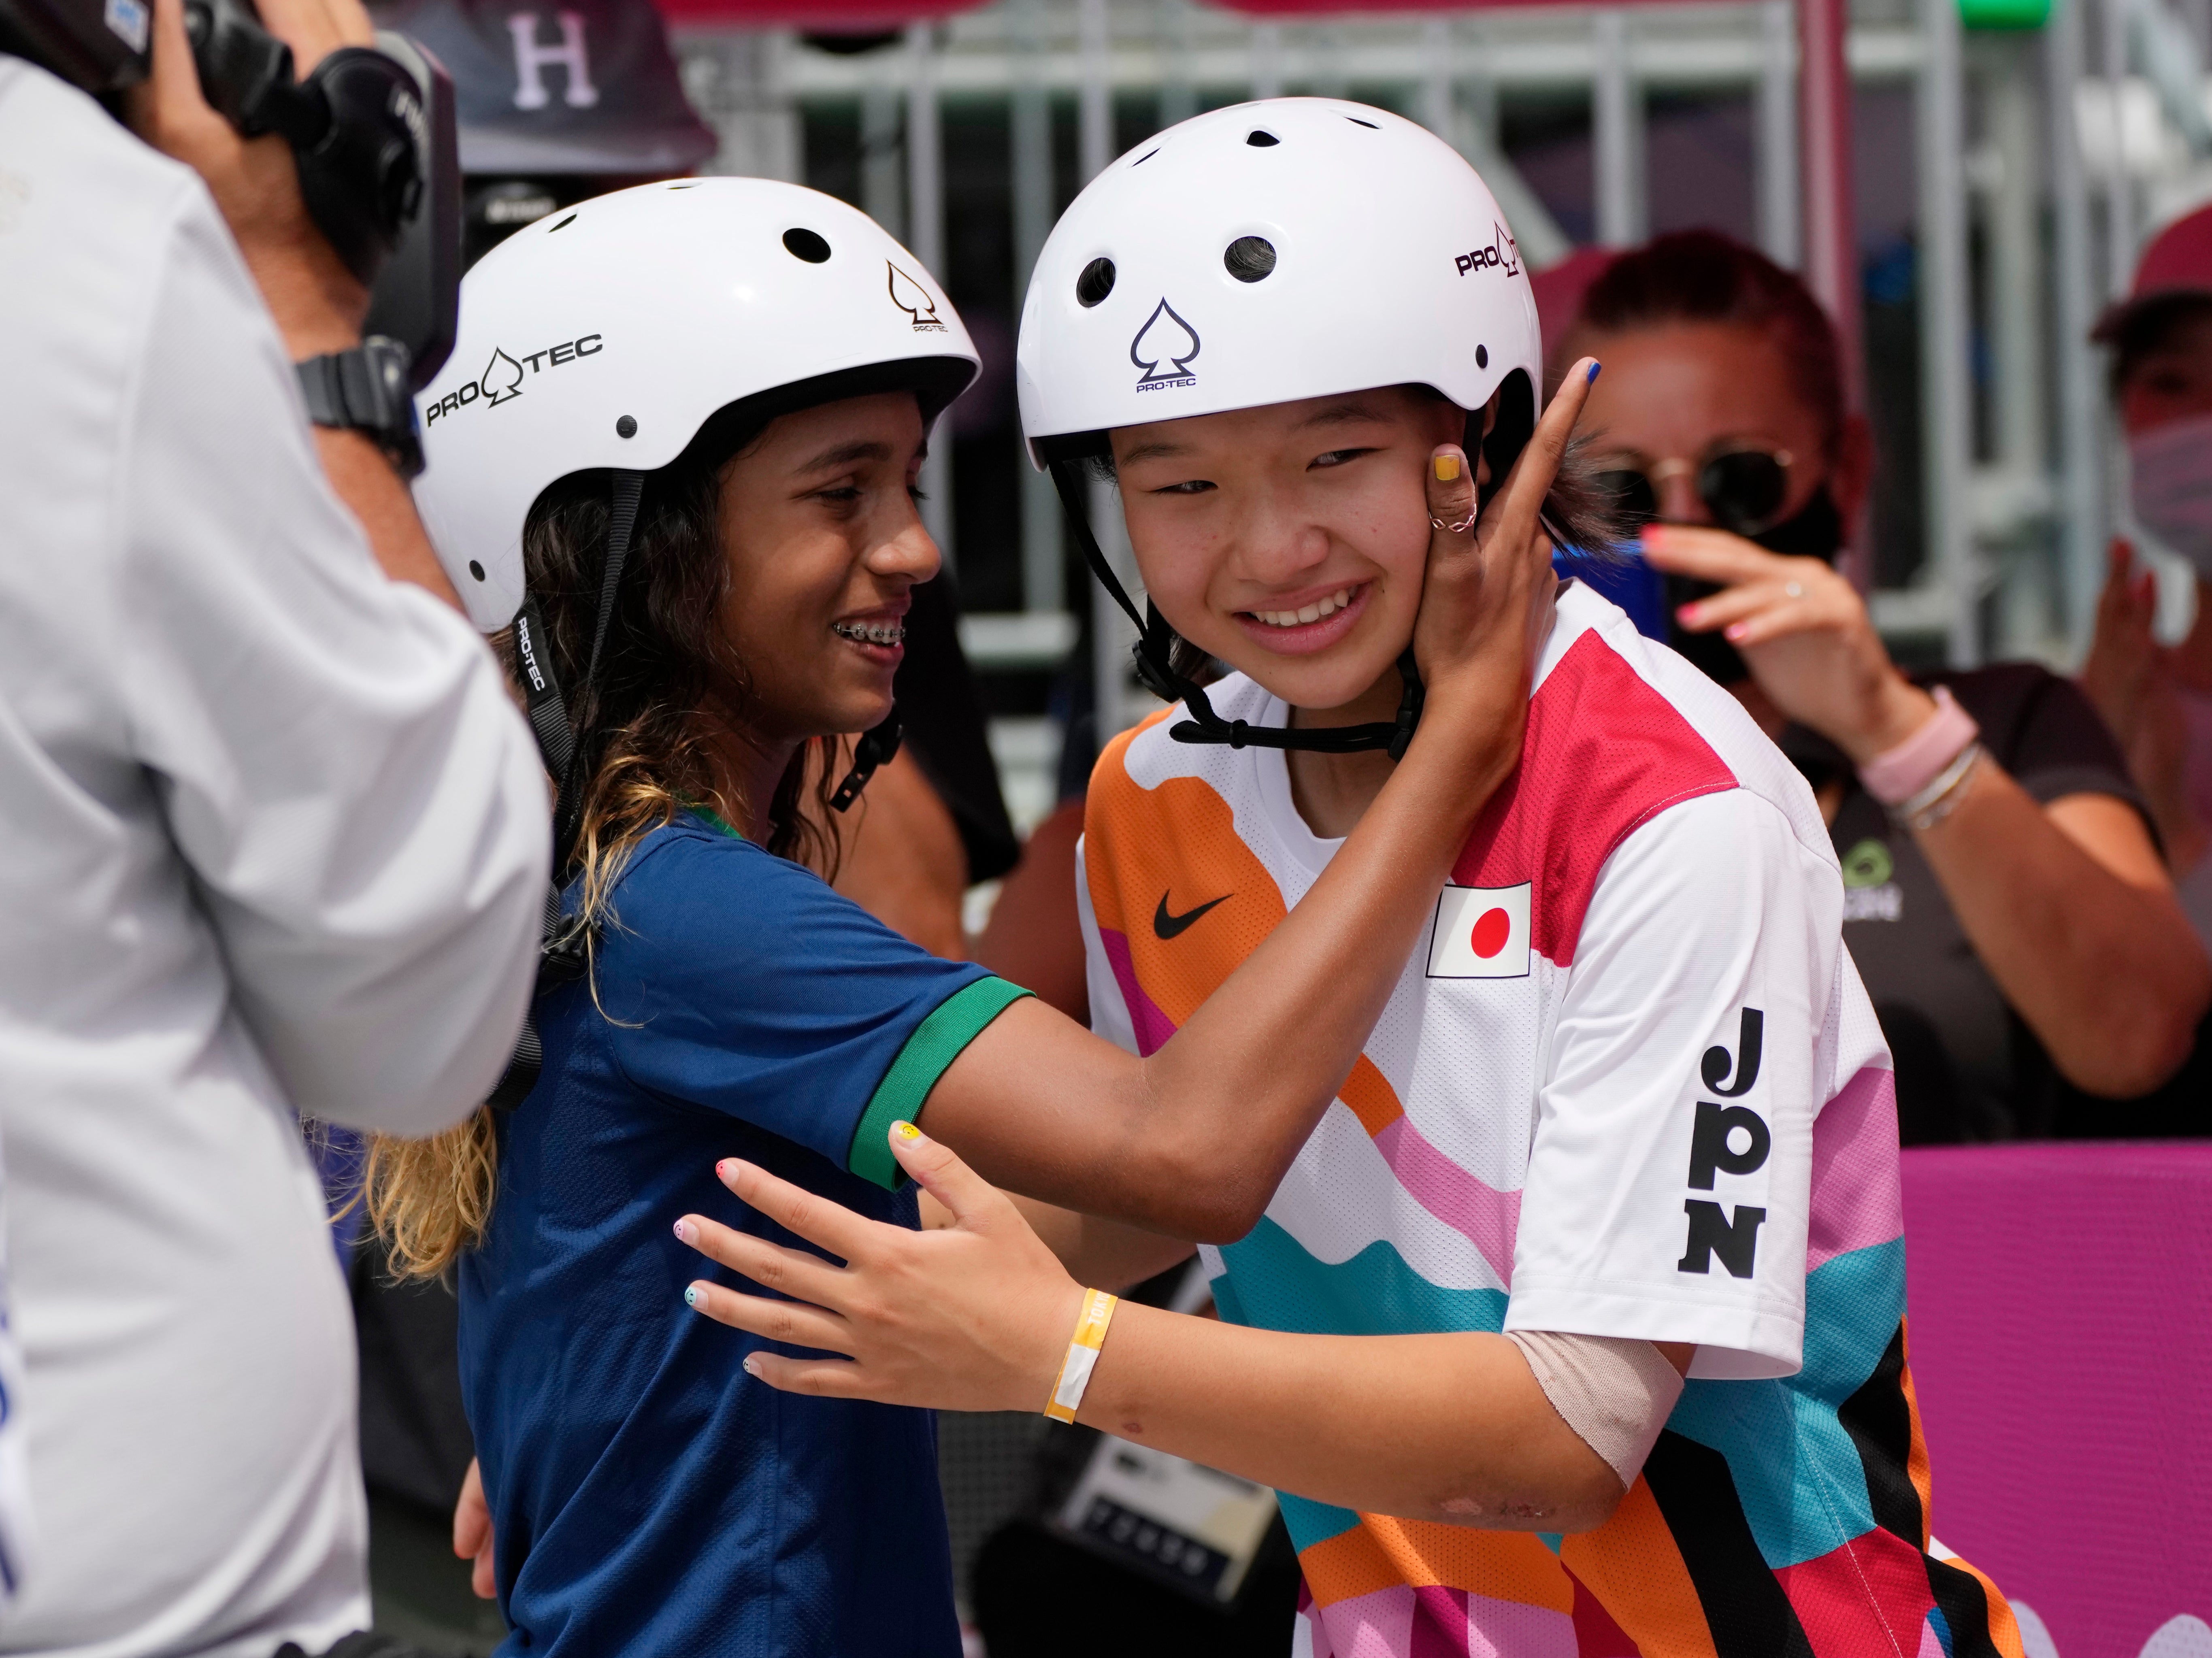 Silver medallist Rayssa Leal of Brazil congratulates gold medal winner Momiji Nishiya of Japan after the women’s street skateboarding finals at the 2020 Olympics